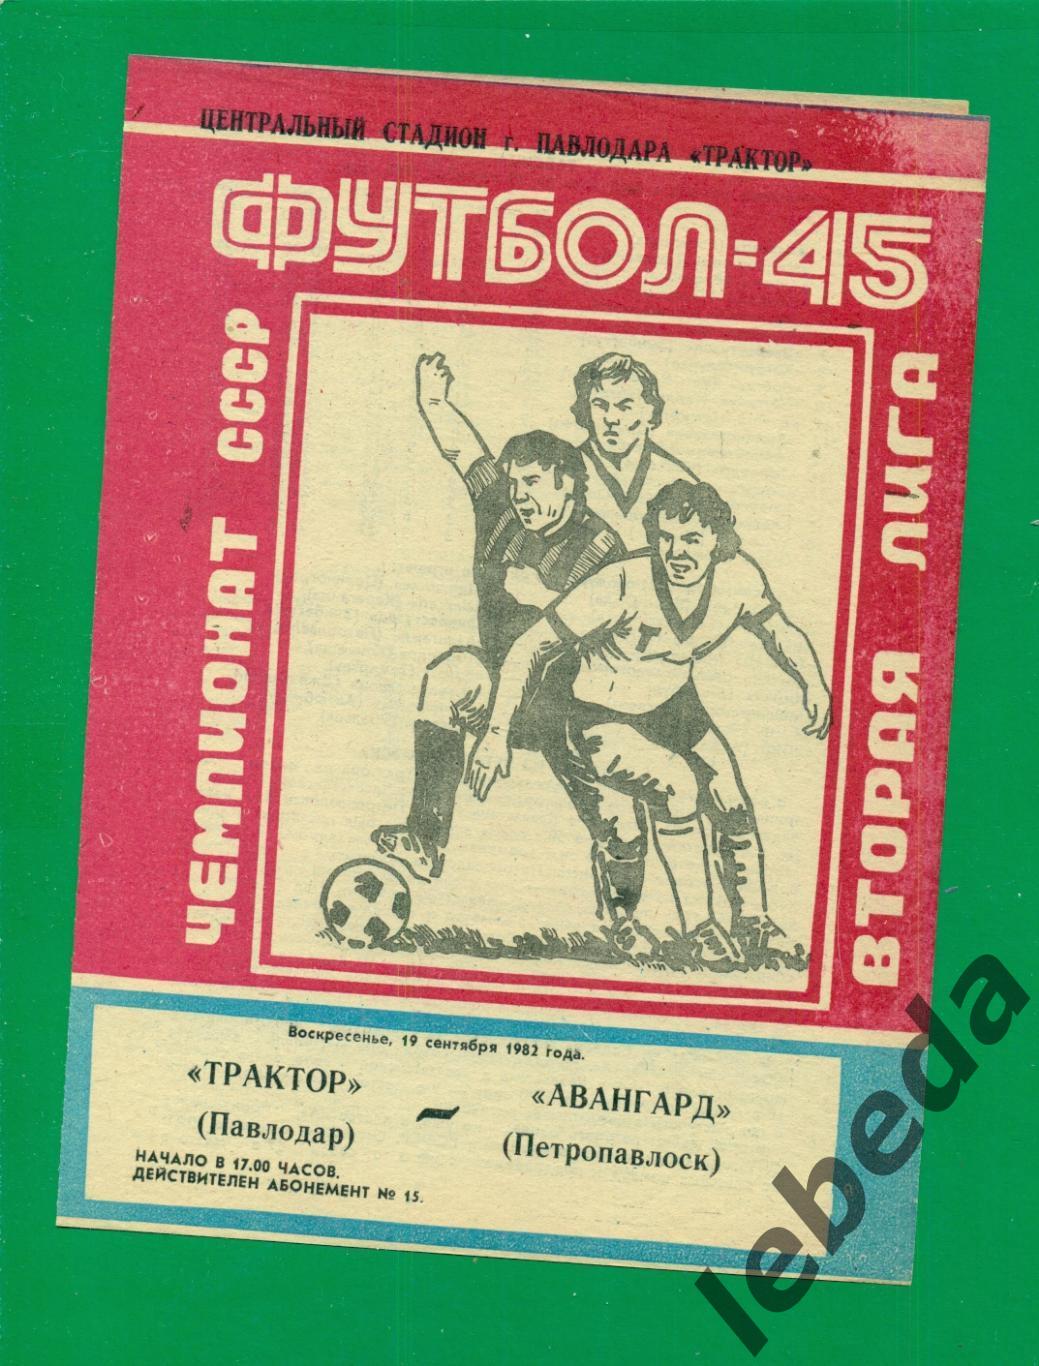 Трактор Павлодар - Авангард Петропавловск - 1982 г. (19.09.82.)